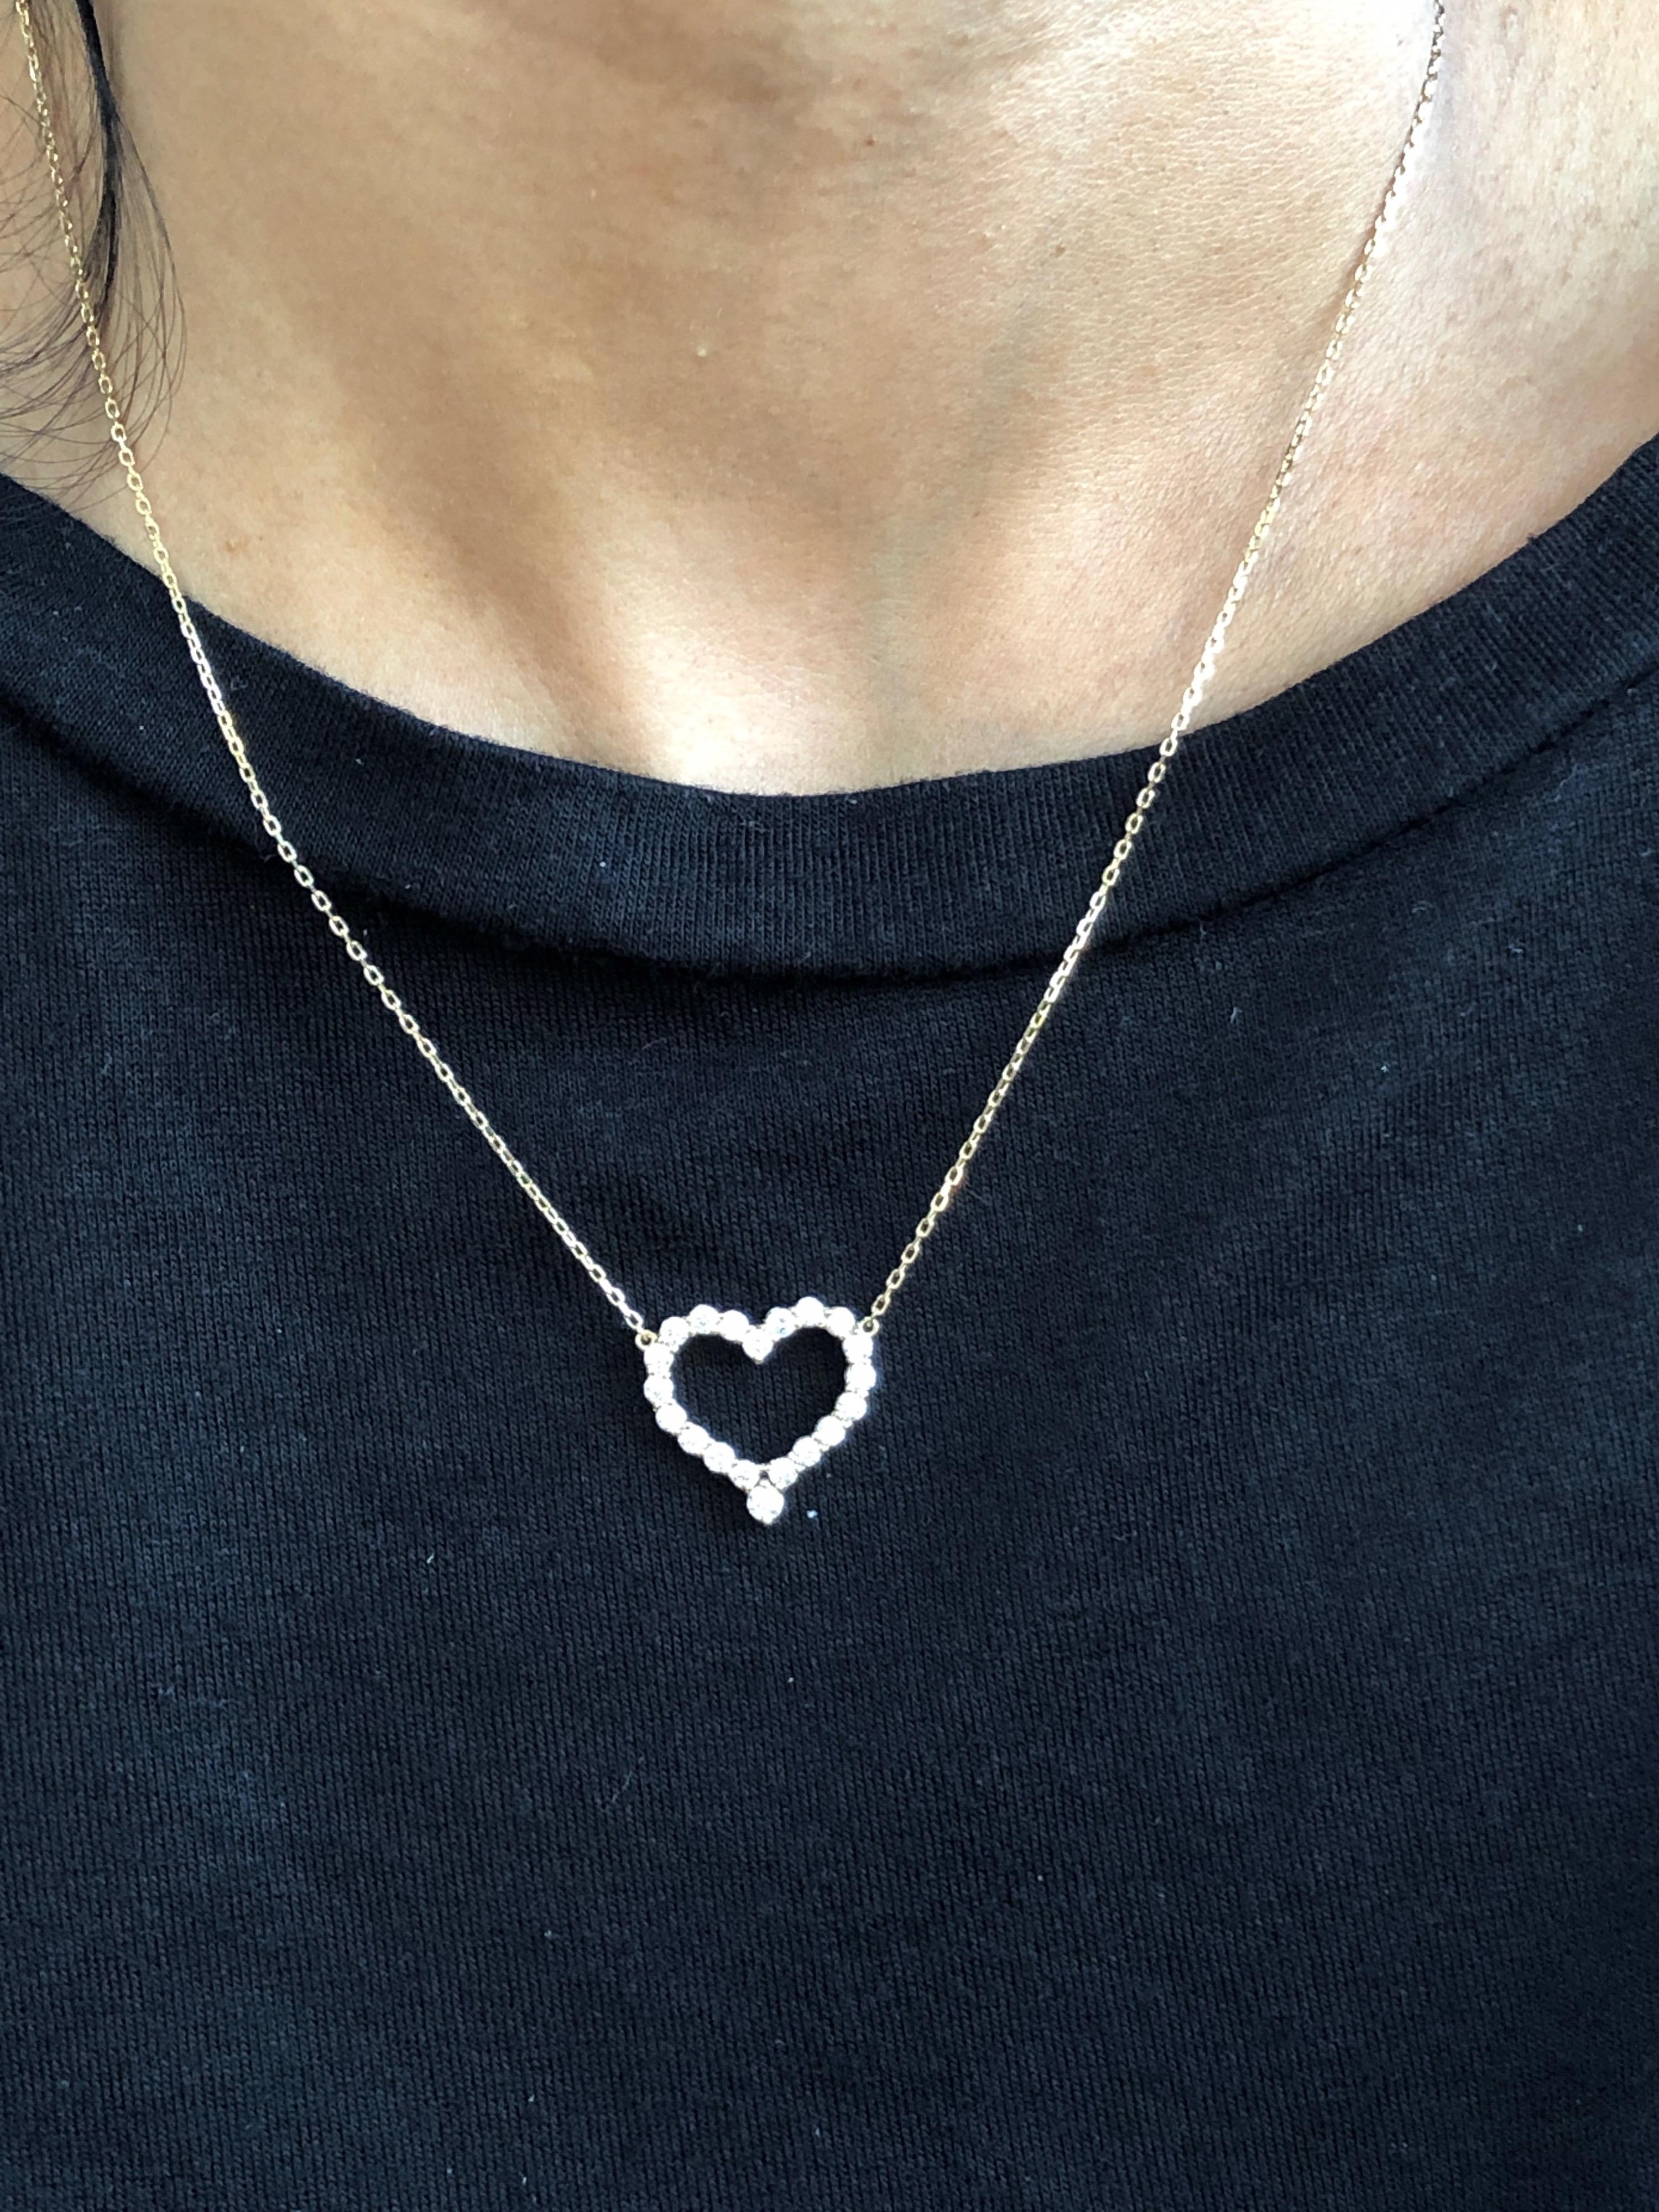 Contemporary Diamond Heart Pendant 14 Karat Yellow Gold Chain Necklace For Sale